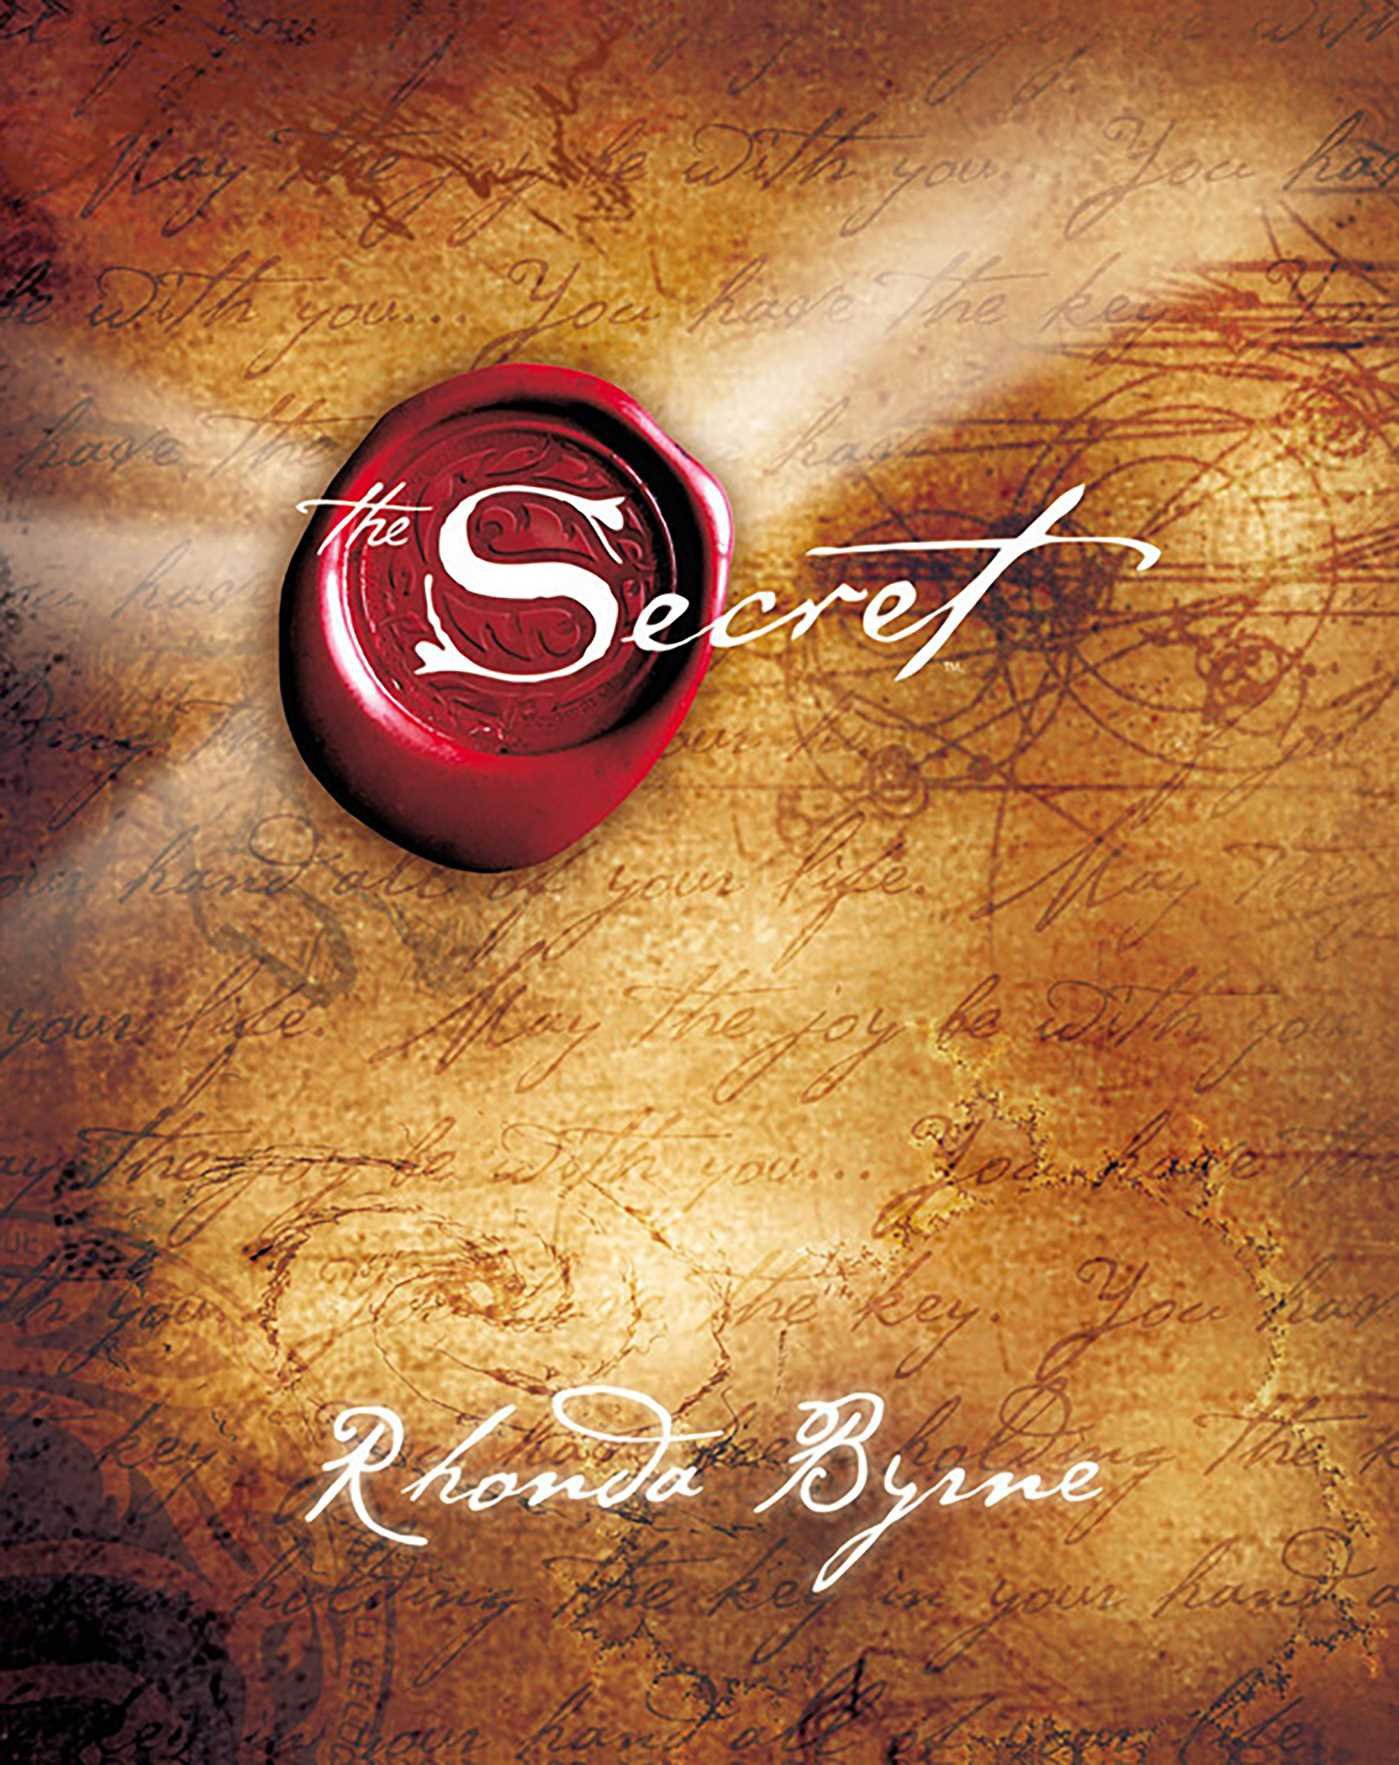 The Secret – Rhonda Byrne